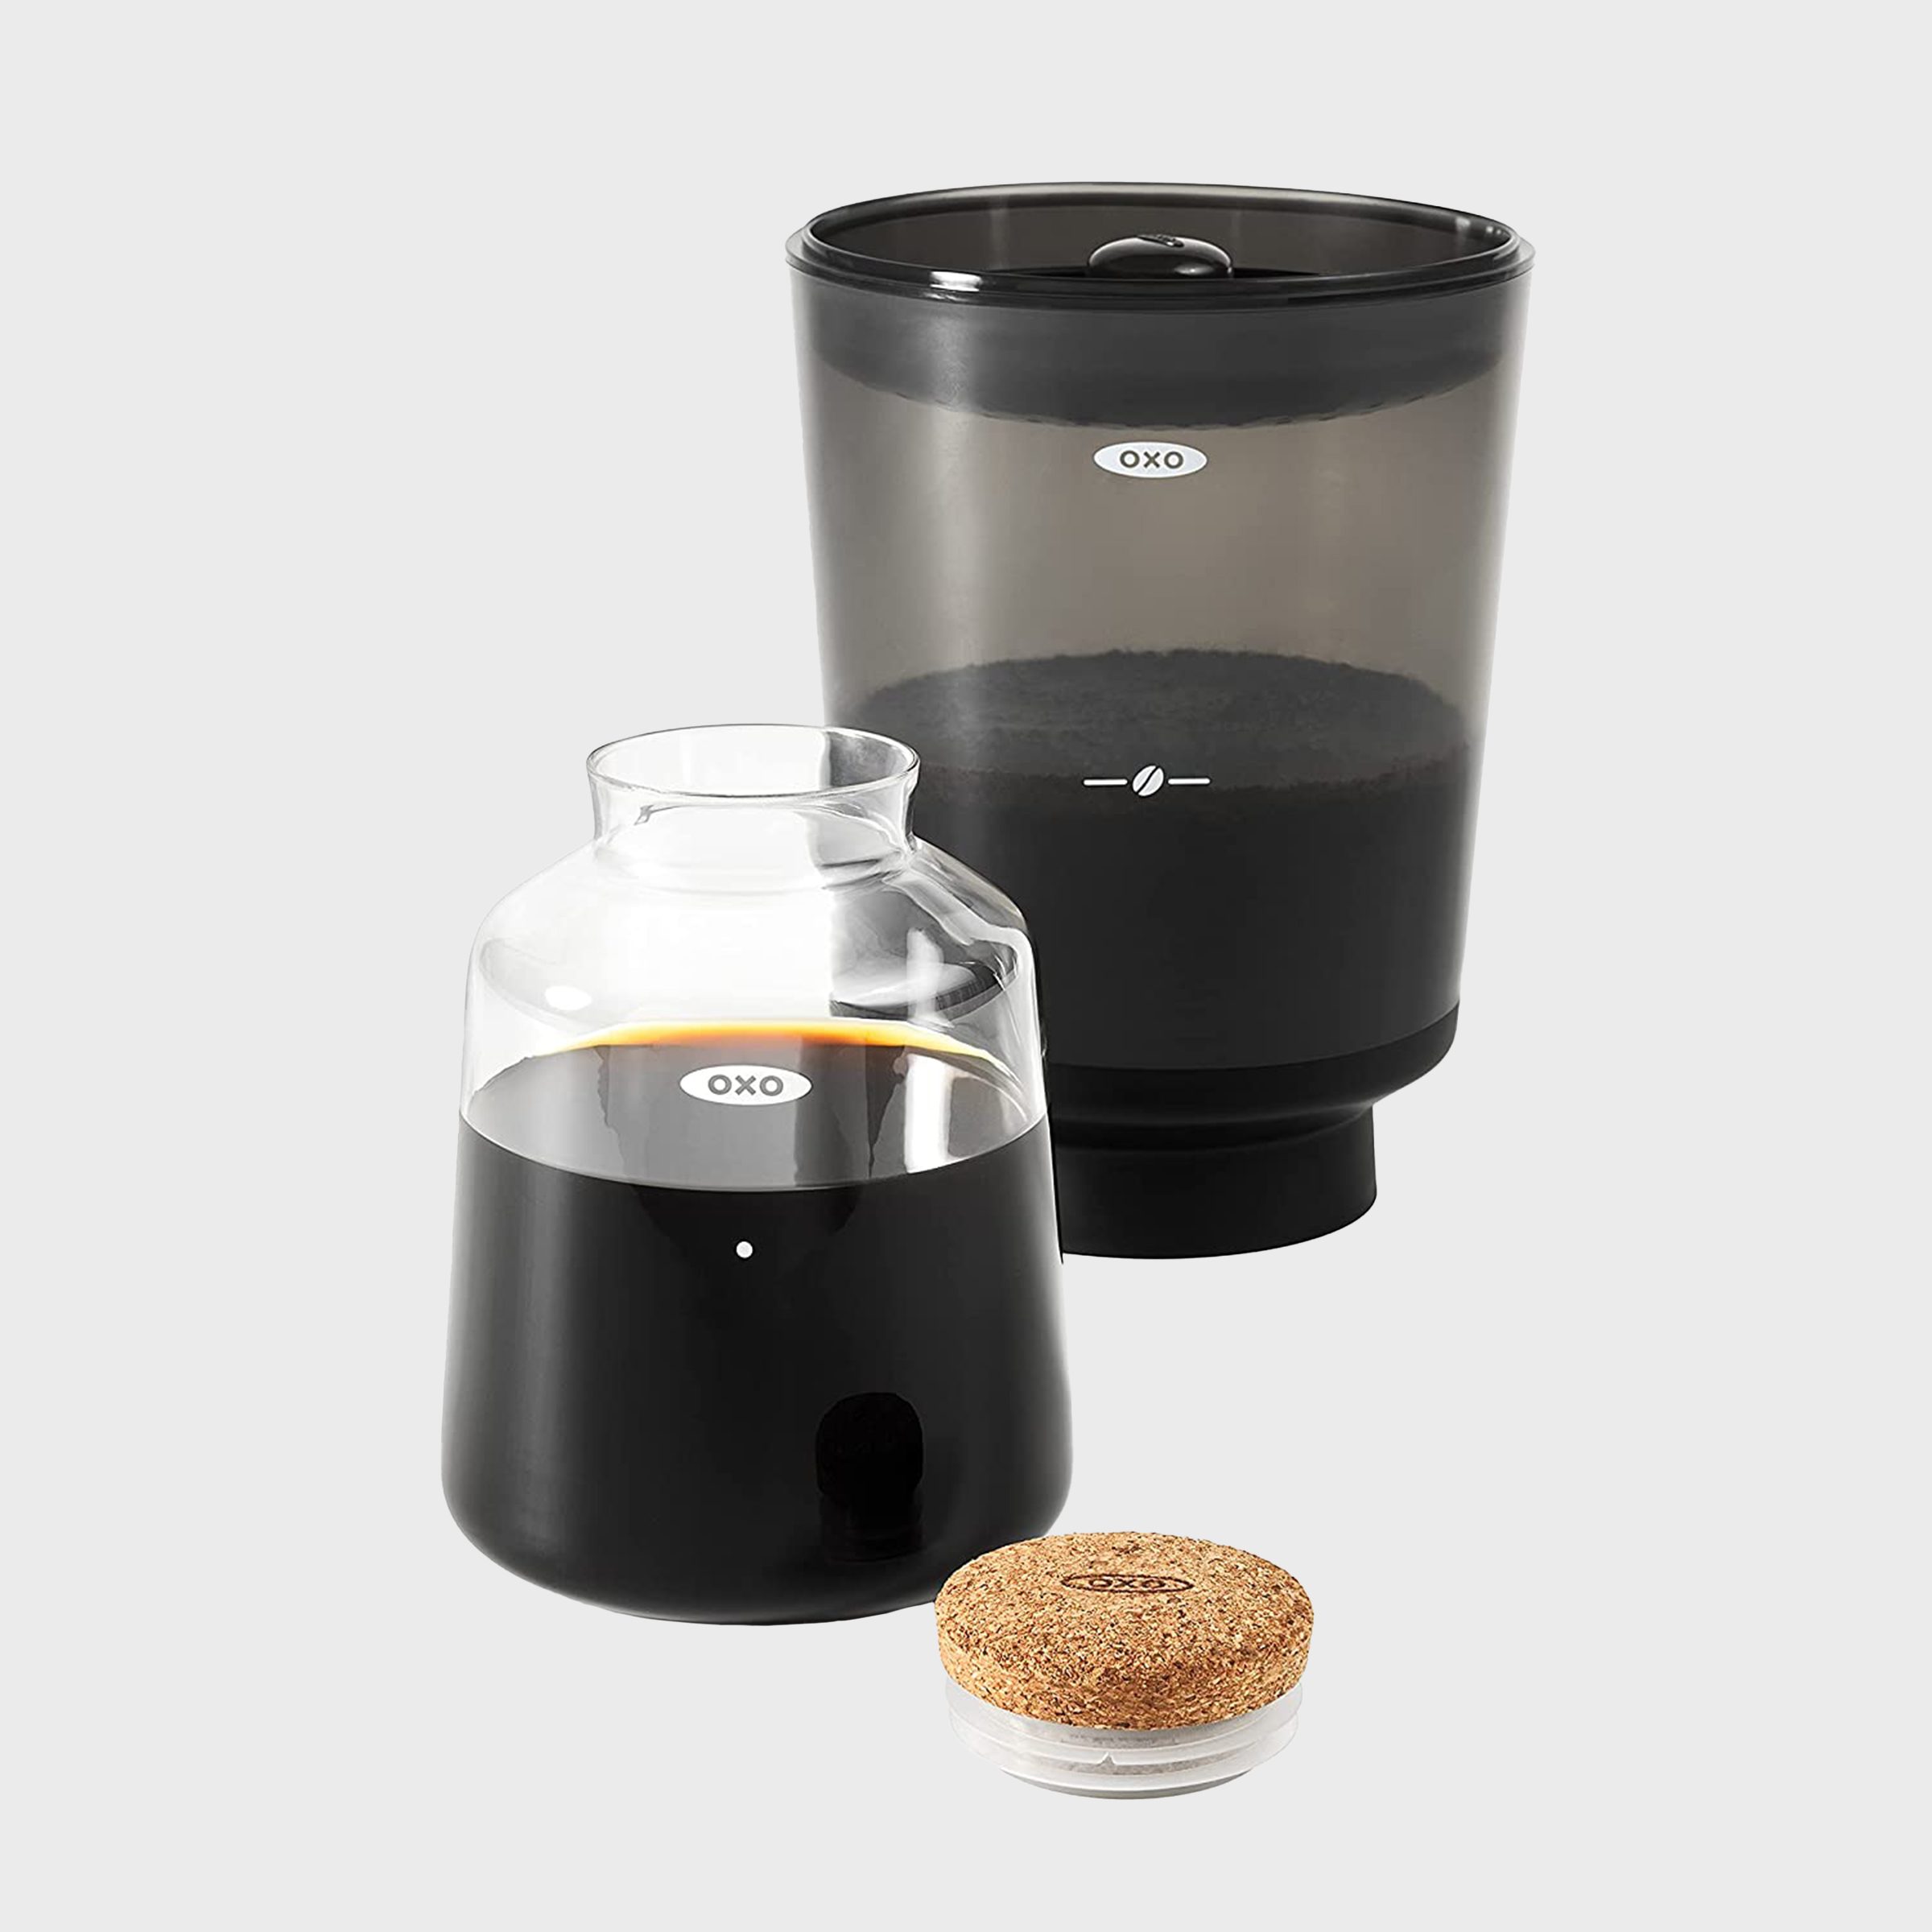 https://www.rd.com/wp-content/uploads/2019/08/OXO-Brew-Compact-Cold-Brew-Coffee-Maker-via-Amazon.com_.jpg?fit=700%2C700